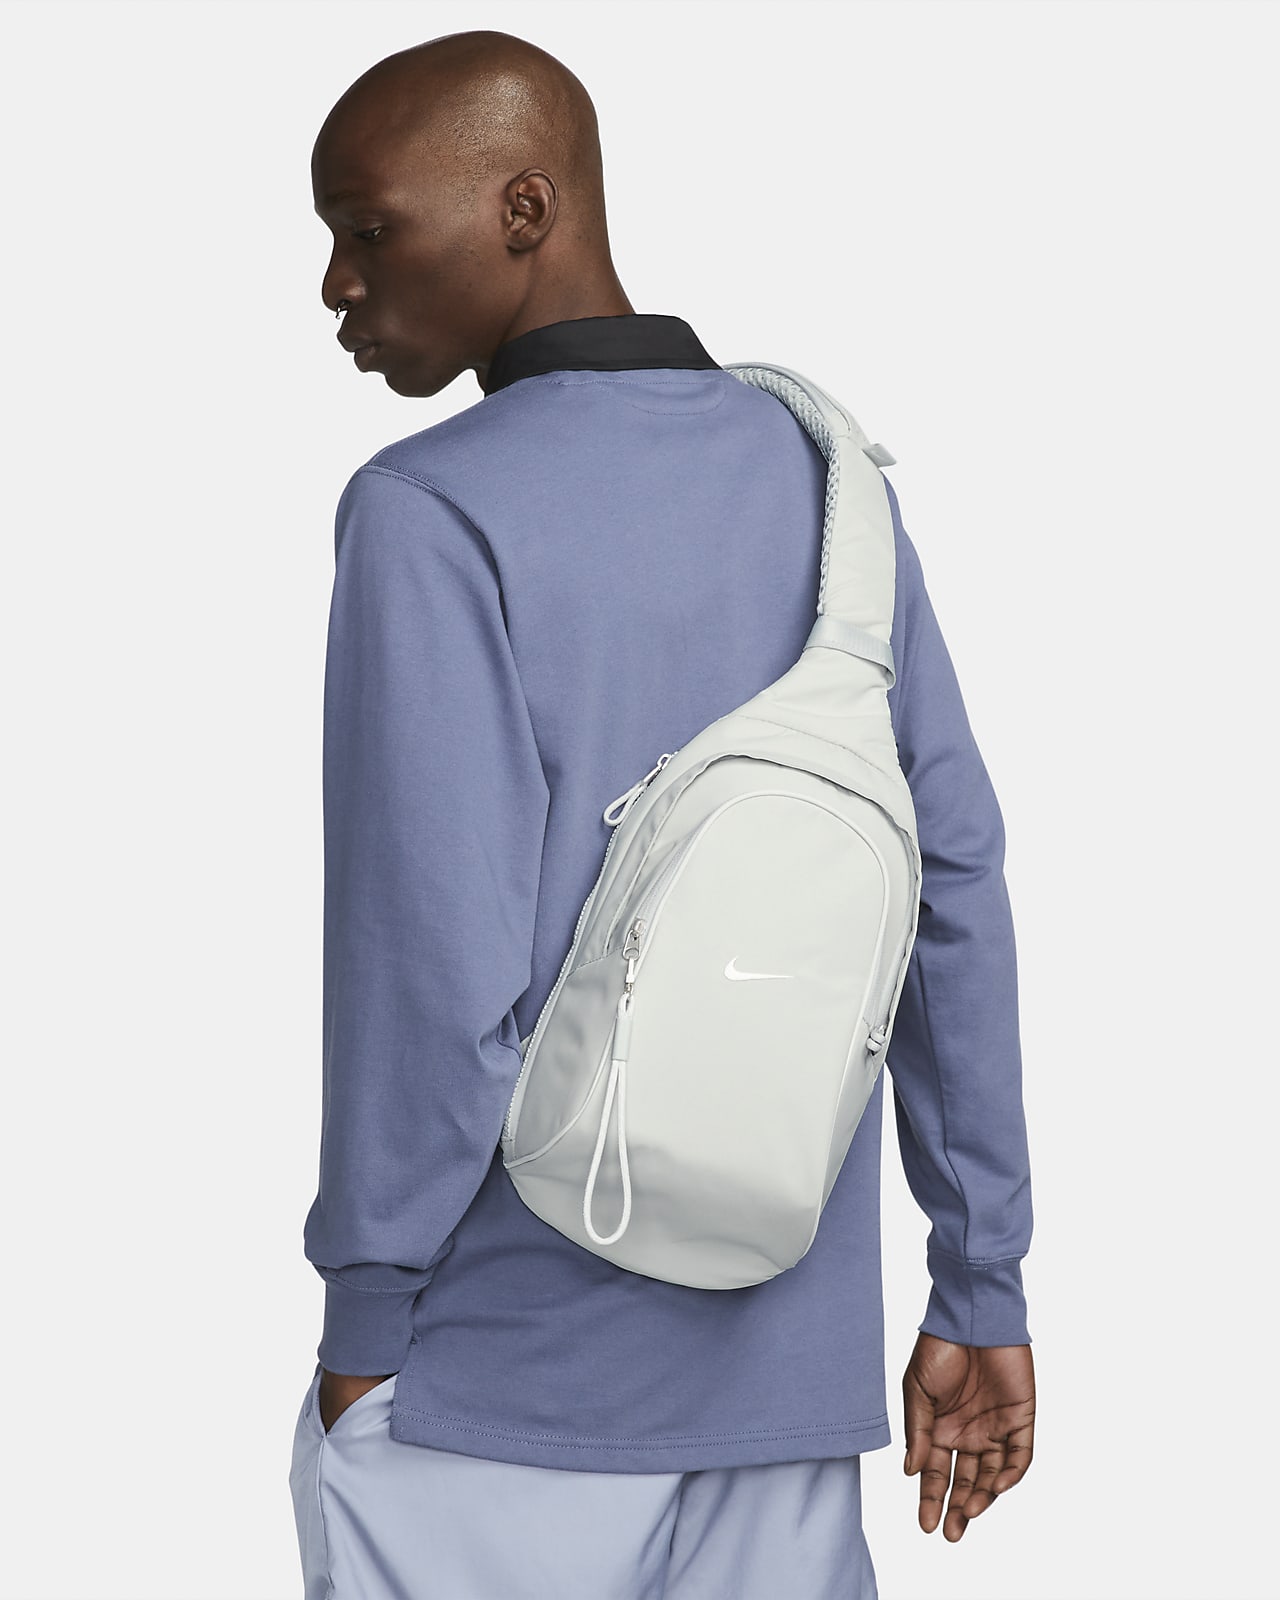 Explore more than 95 sling bag latest